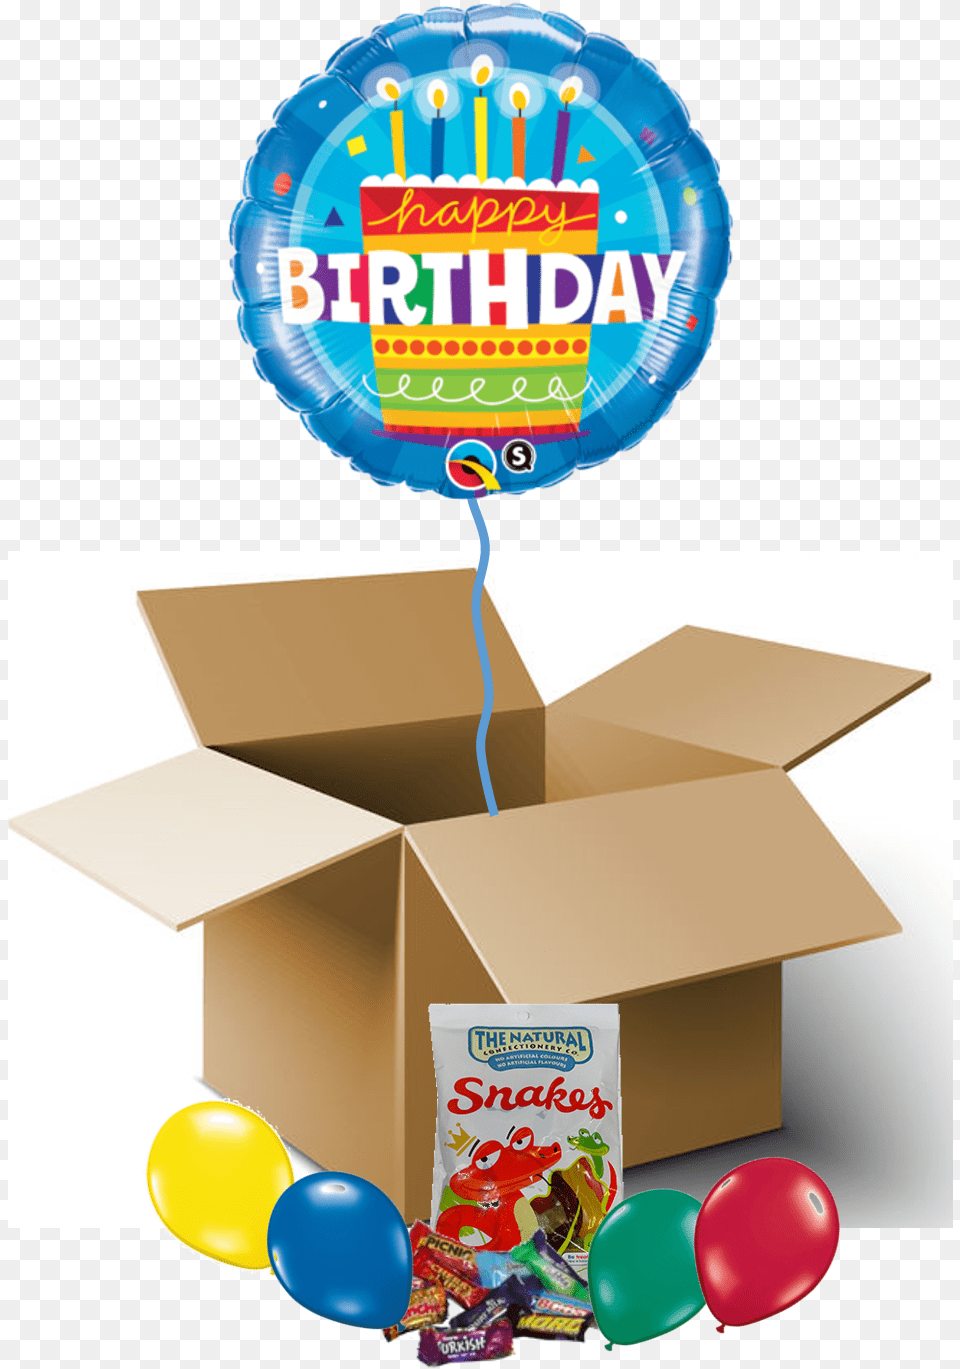 Happy Birthday Cake Balloon In A Box Birthday Purple Sparkle Foil Balloon, Cardboard, Carton, Candle Png